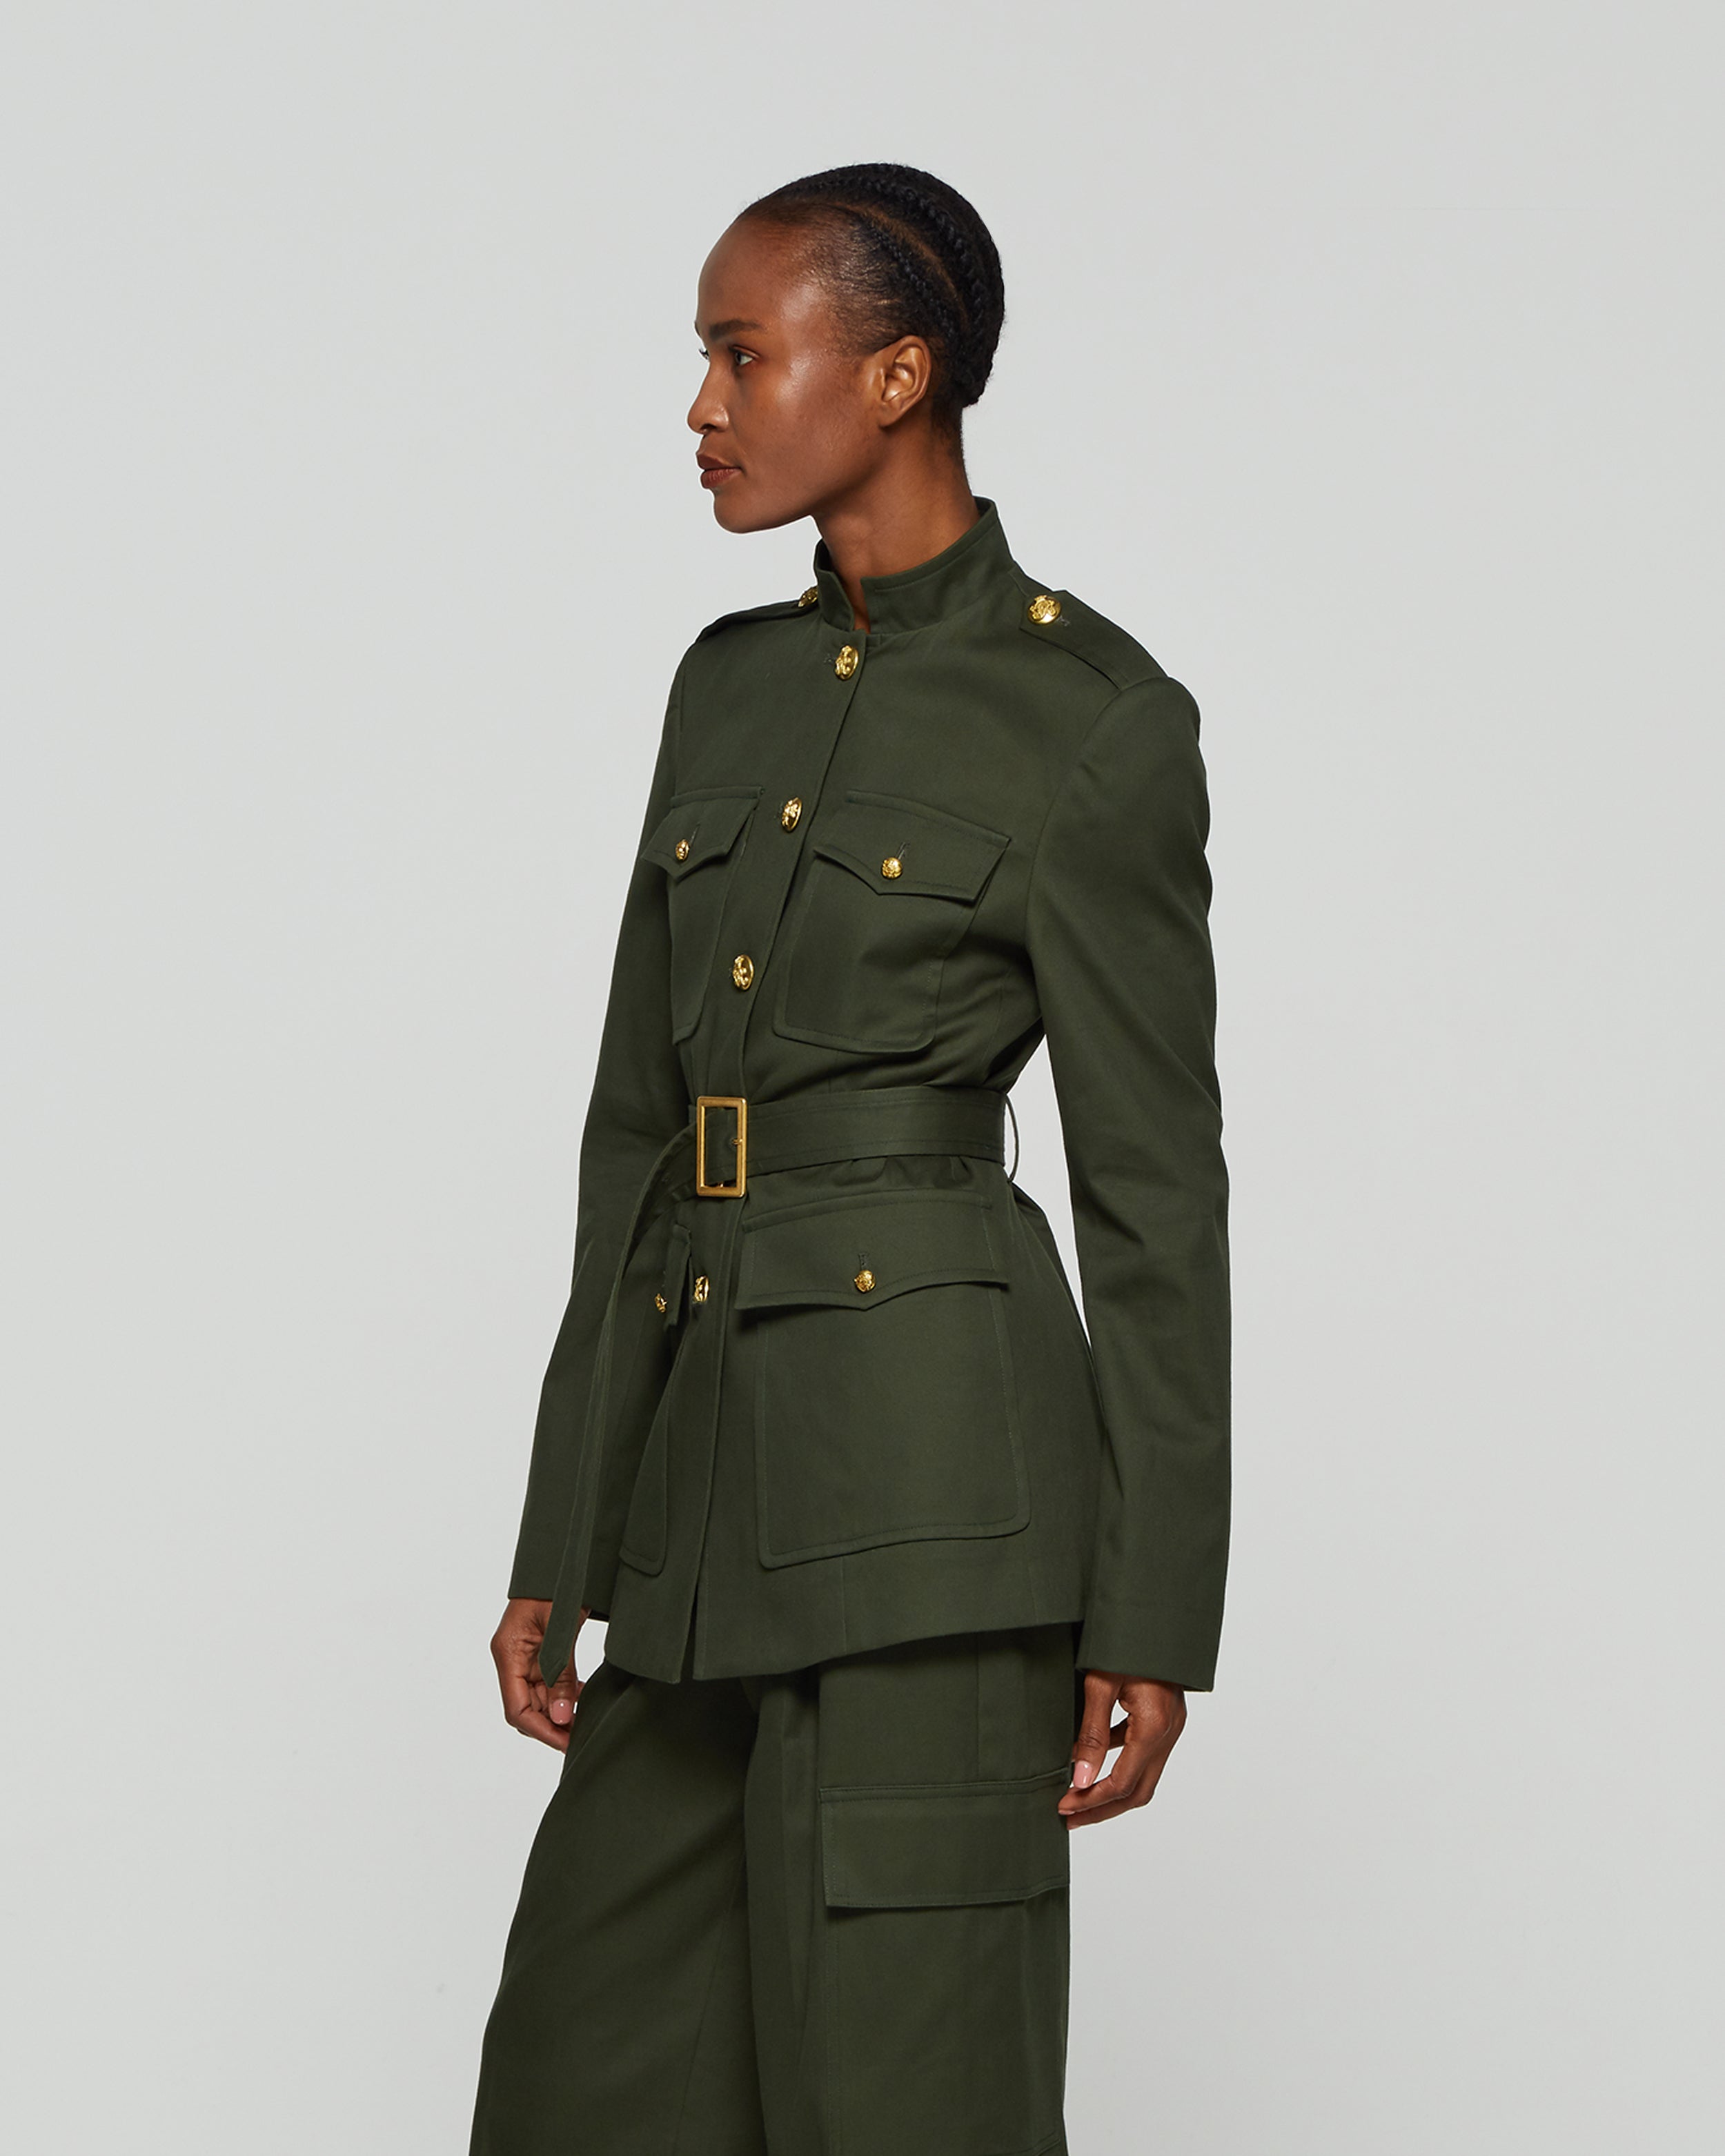 Green Military Jacket / Soulshine Boutique - soulshine boutique